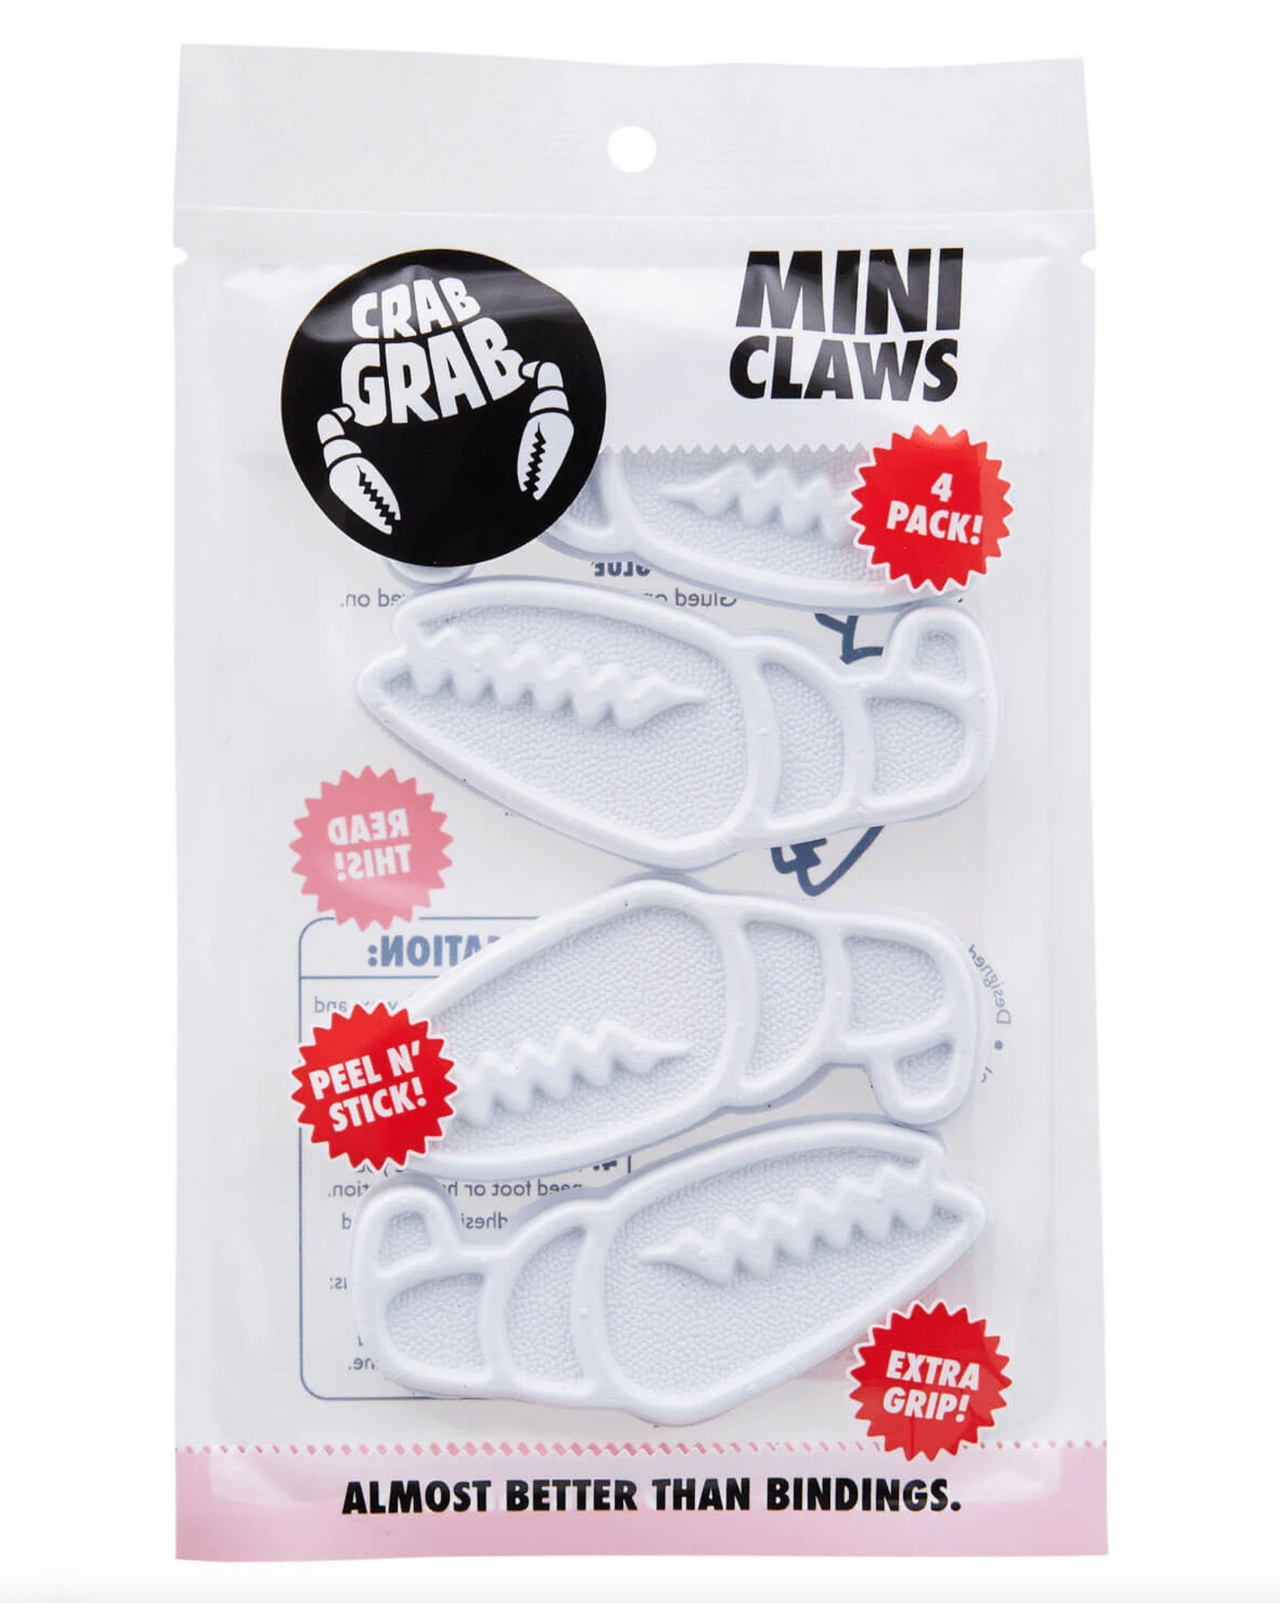 Crab Grab Mini Claws 4 Pack - White